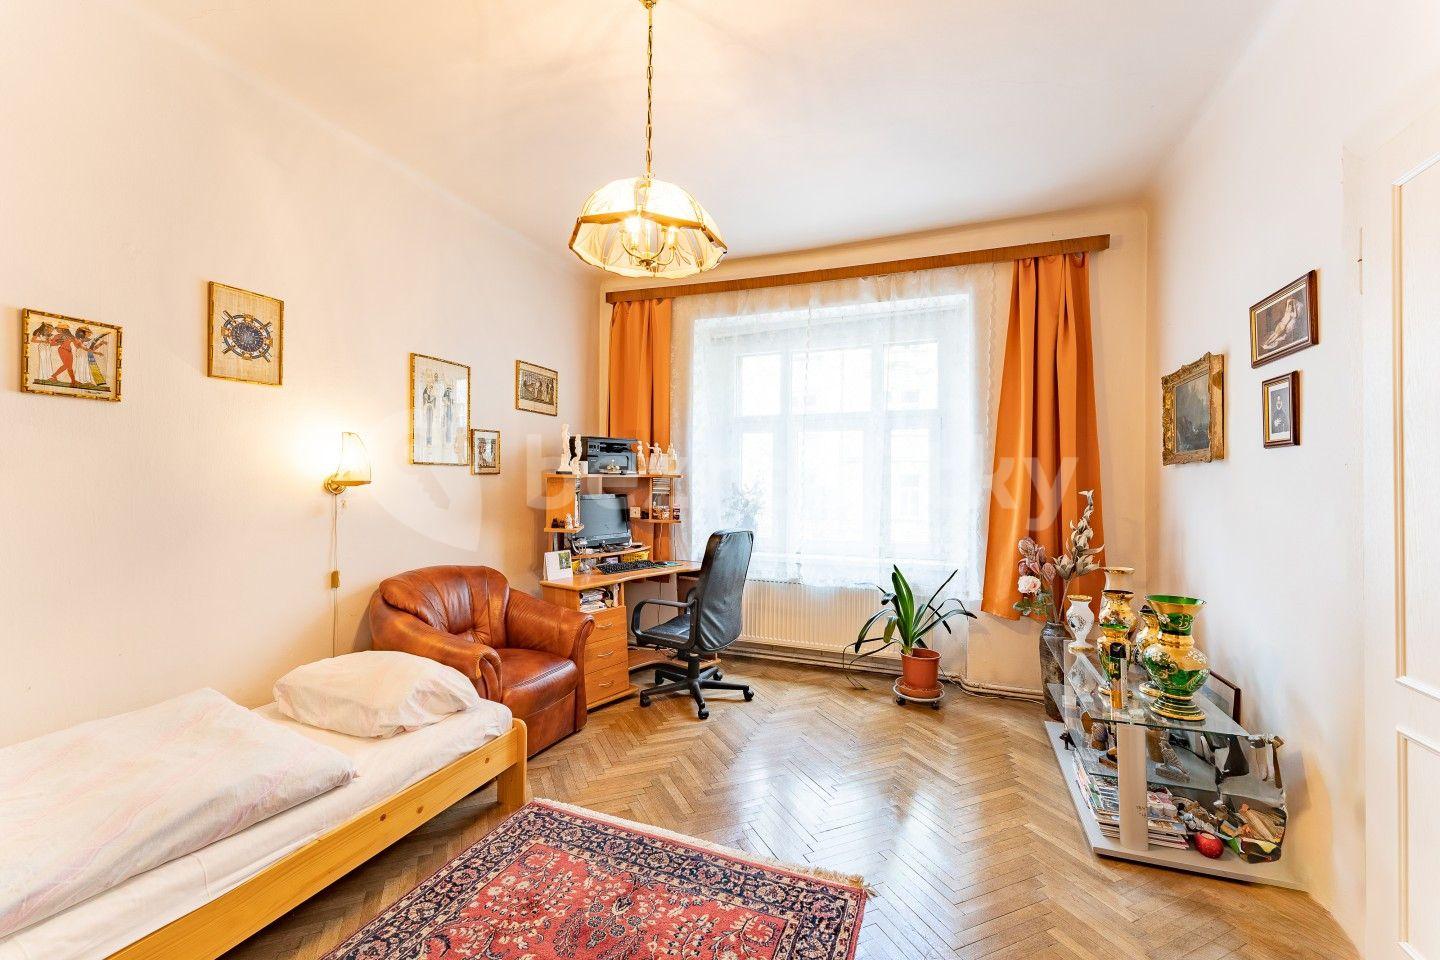 4 bedroom flat for sale, 114 m², Jaromírova, Prague, Prague